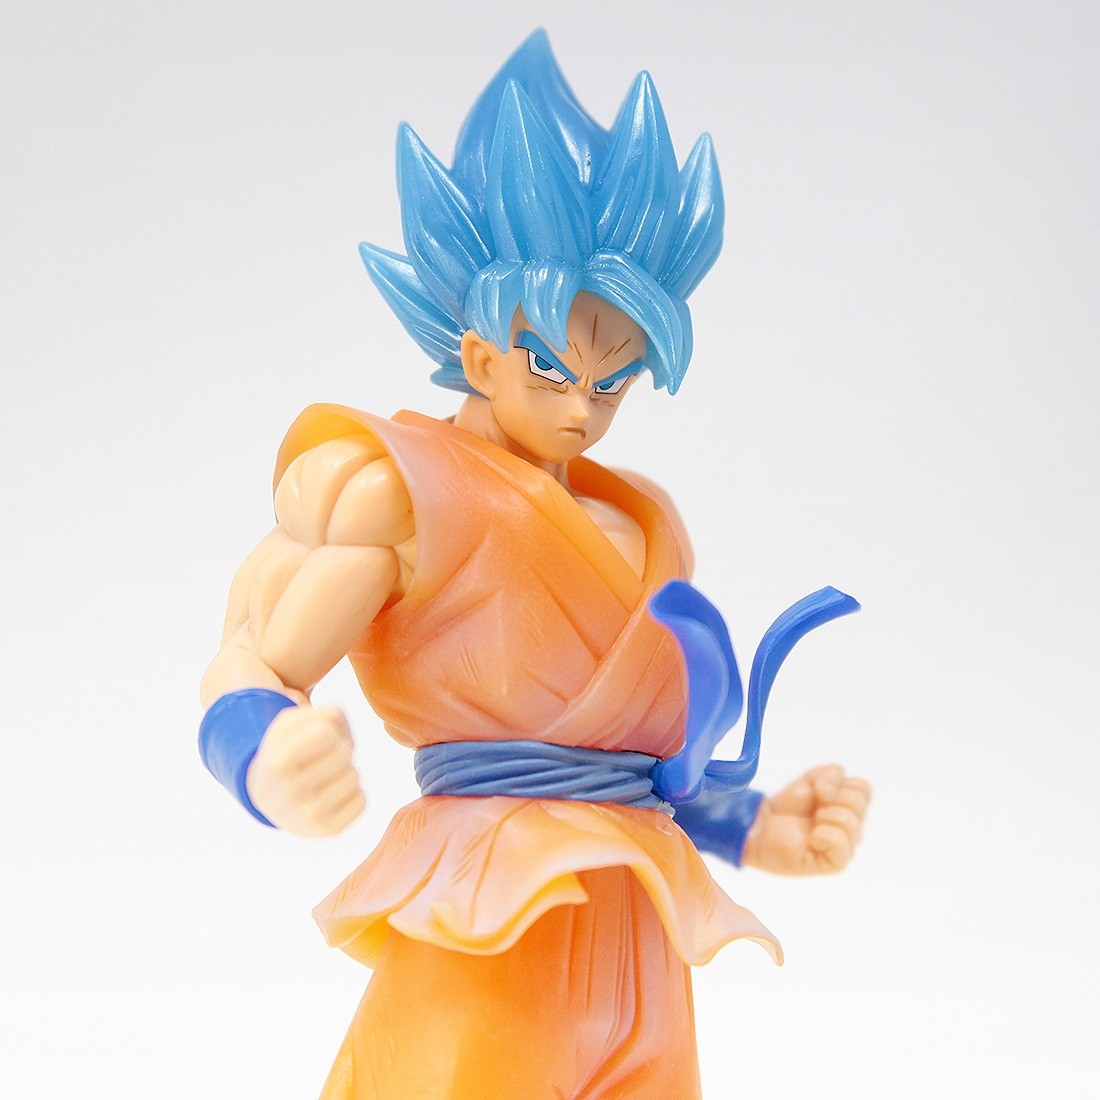 Dragon Ball Super - Figurine Goku Ssjb - Clearise